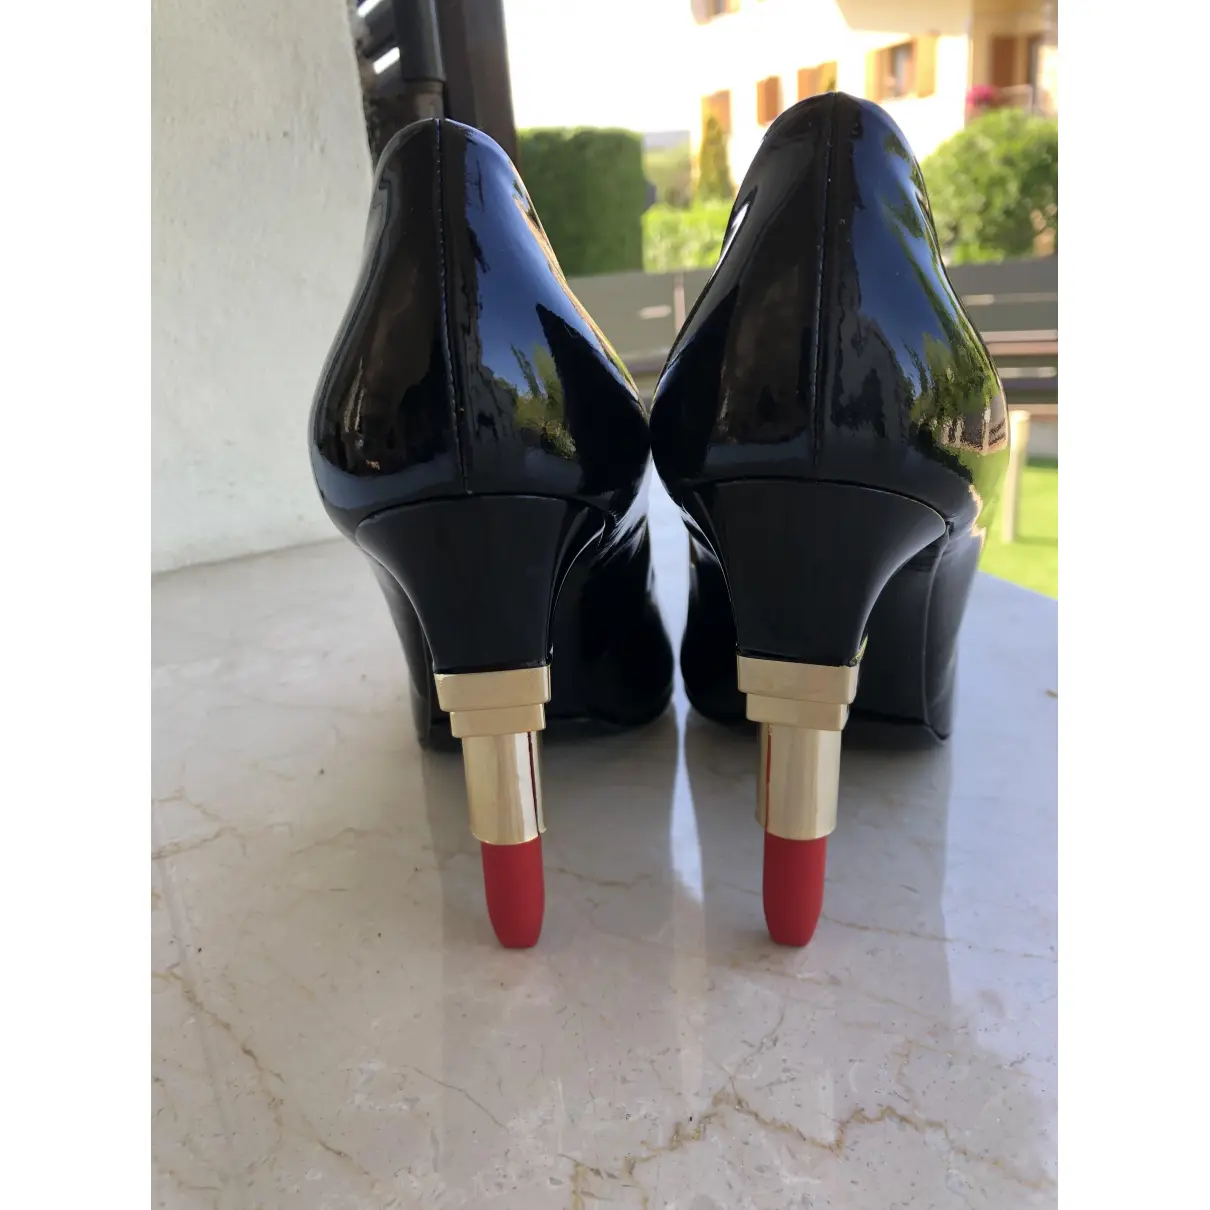 Patent leather heels Alberto Guardiani